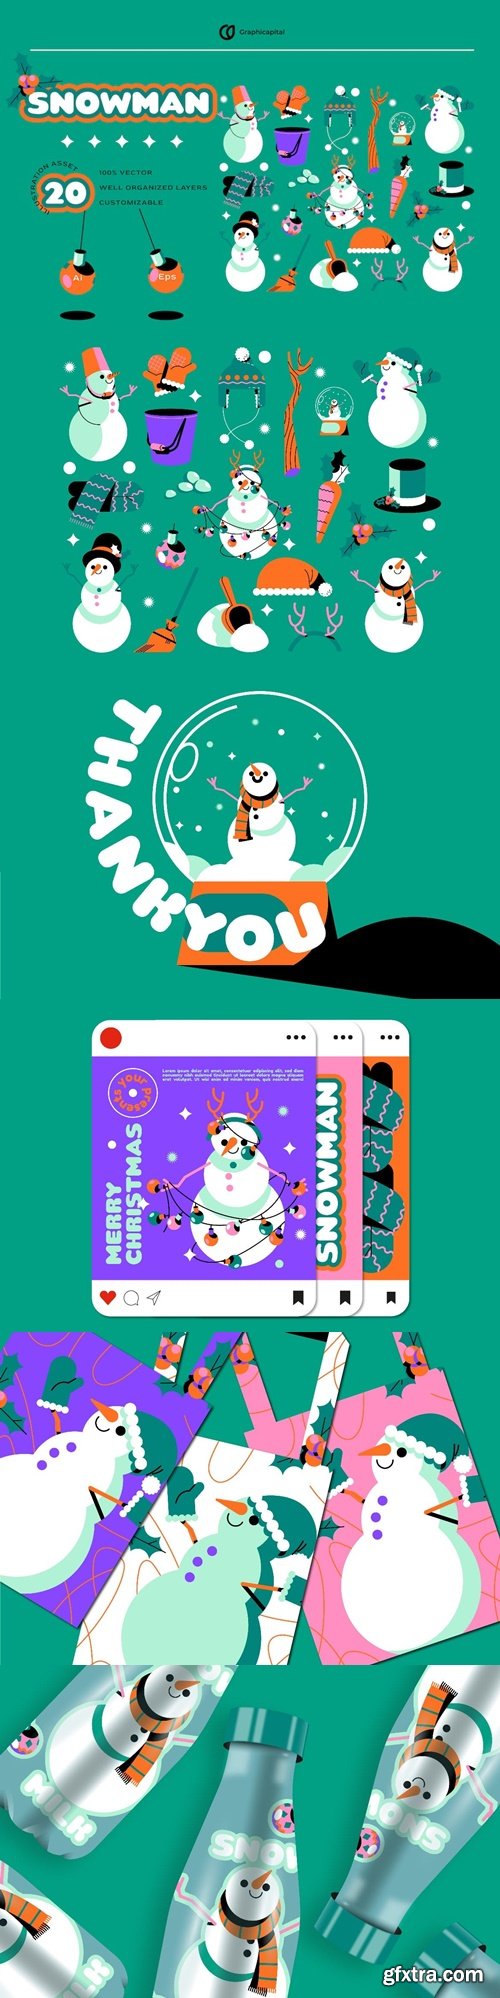 Turquoise Flat Design Snowman Illustration Set BH5RUHK